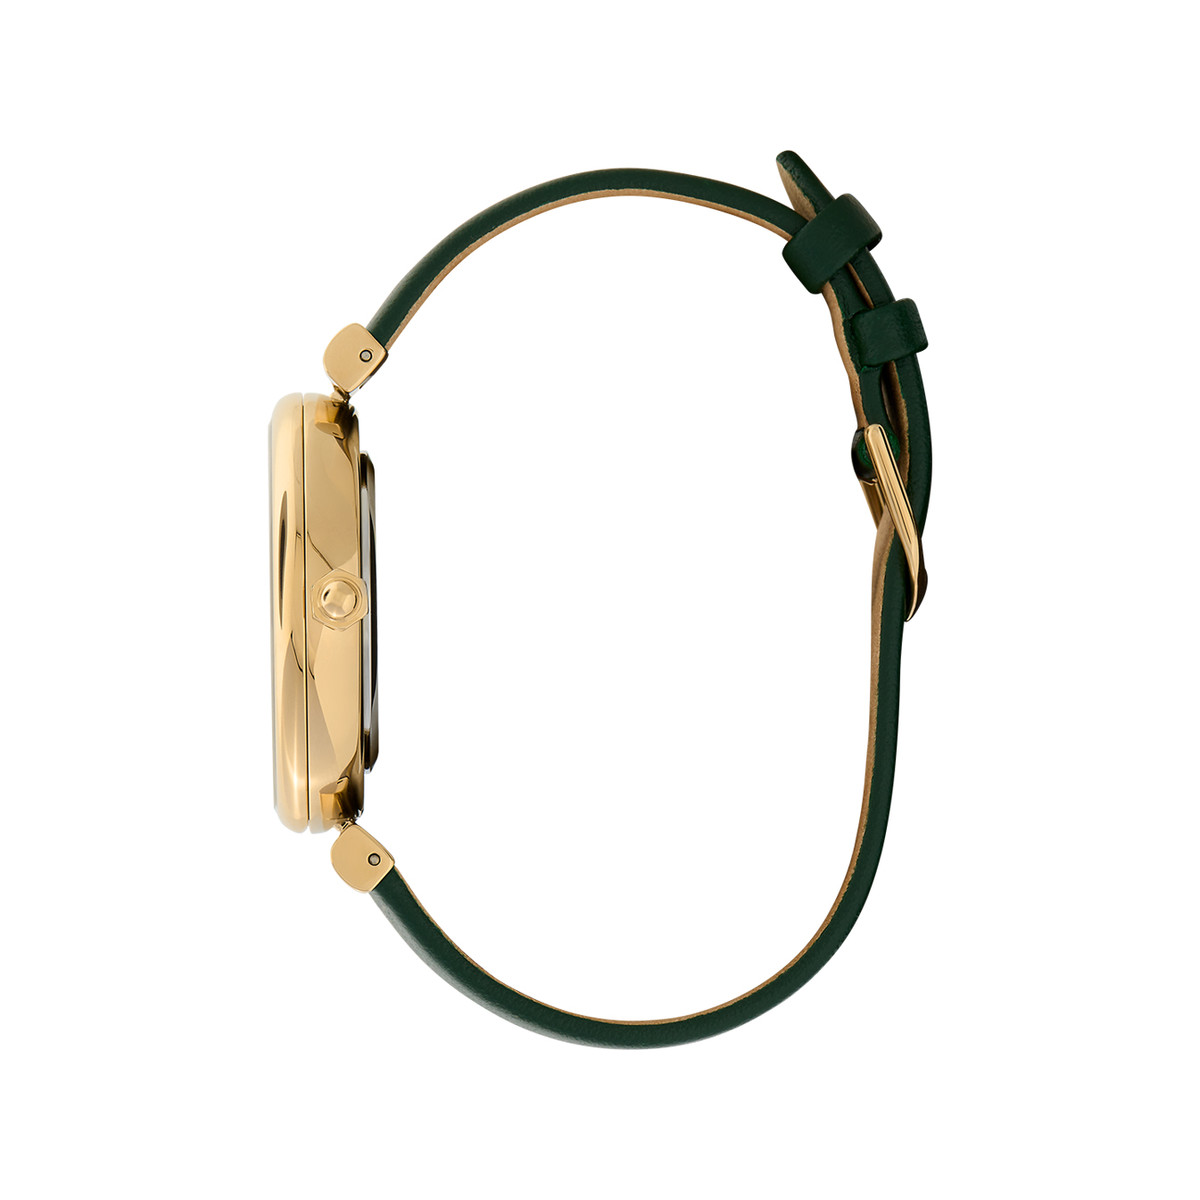 Montre OLIVIA BURTON dogwood femme analogique, bracelet cuir vert - vue 2